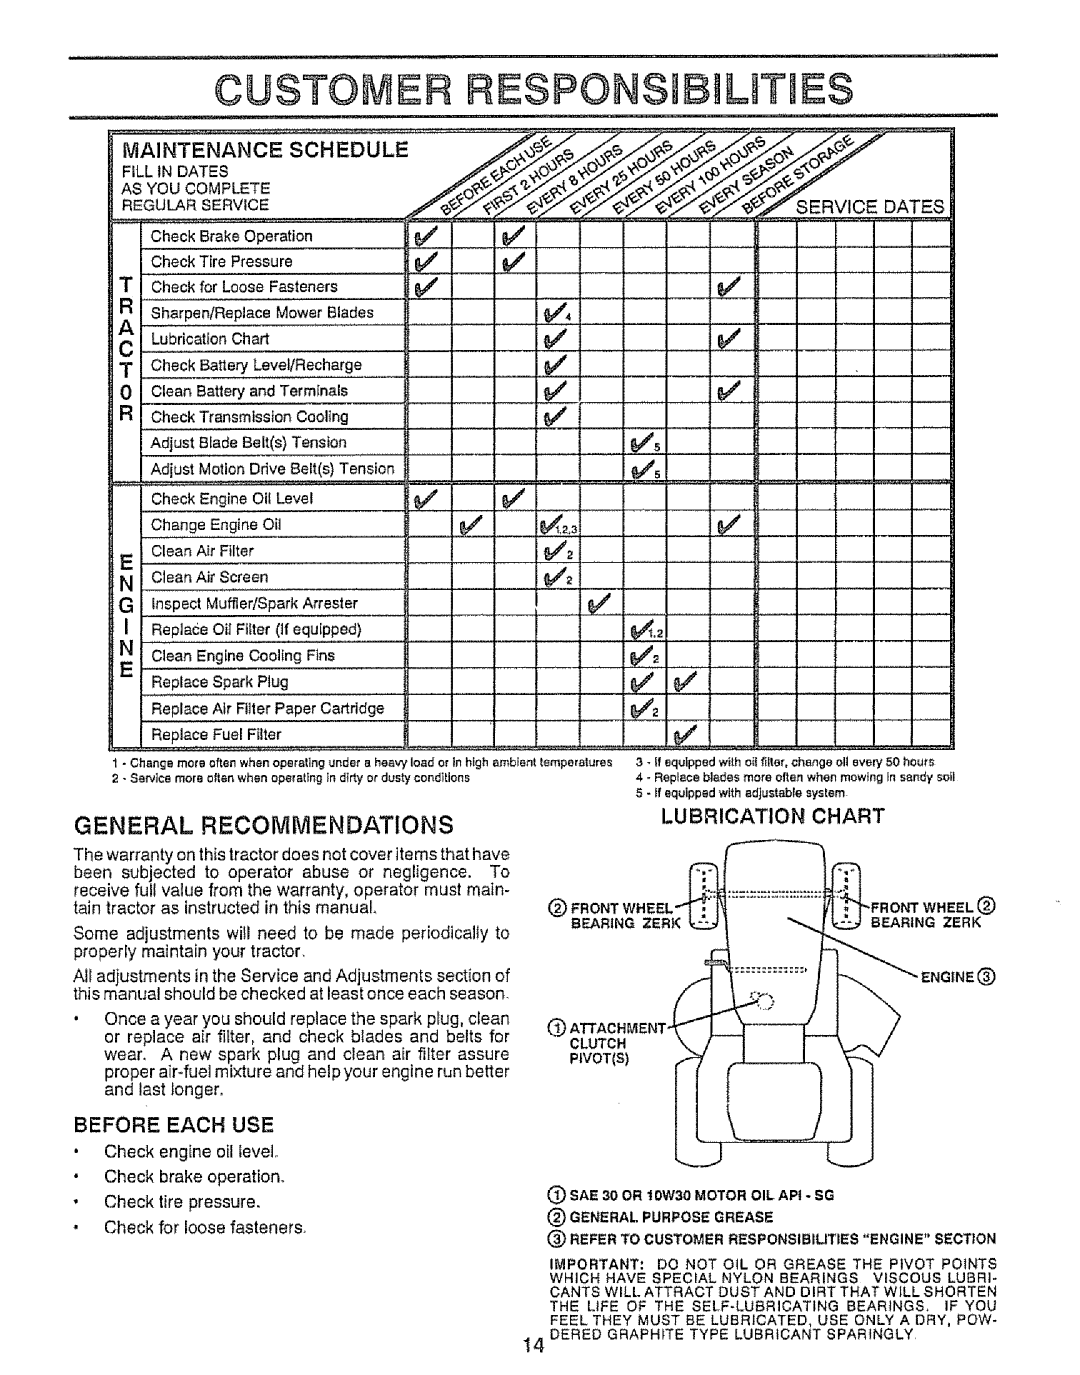 Craftsman 917.255561 owner manual CUSTOMSR RESPONS LtT ES, General Recommendations, Maintenance Schedule, Lubrication Chart 